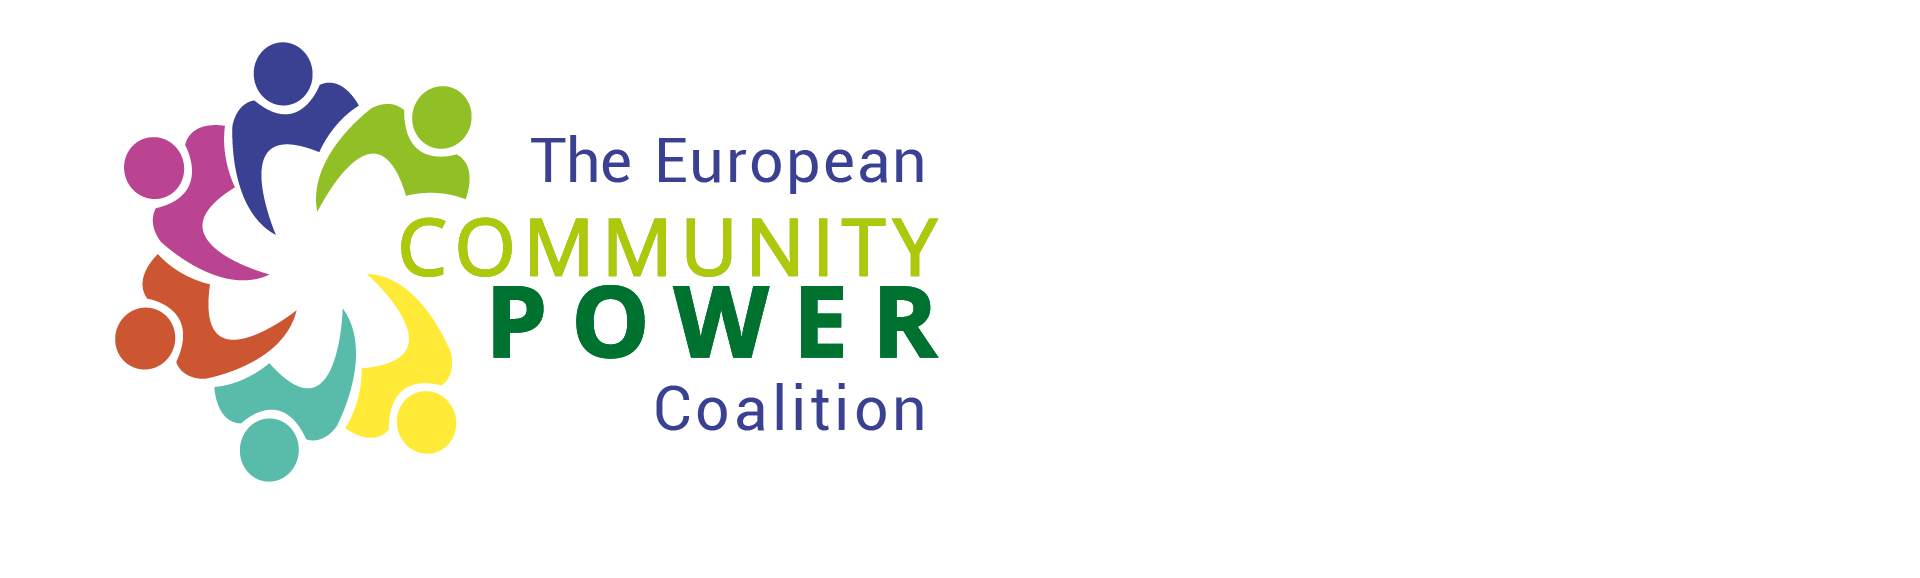 The European Community Power Coalition